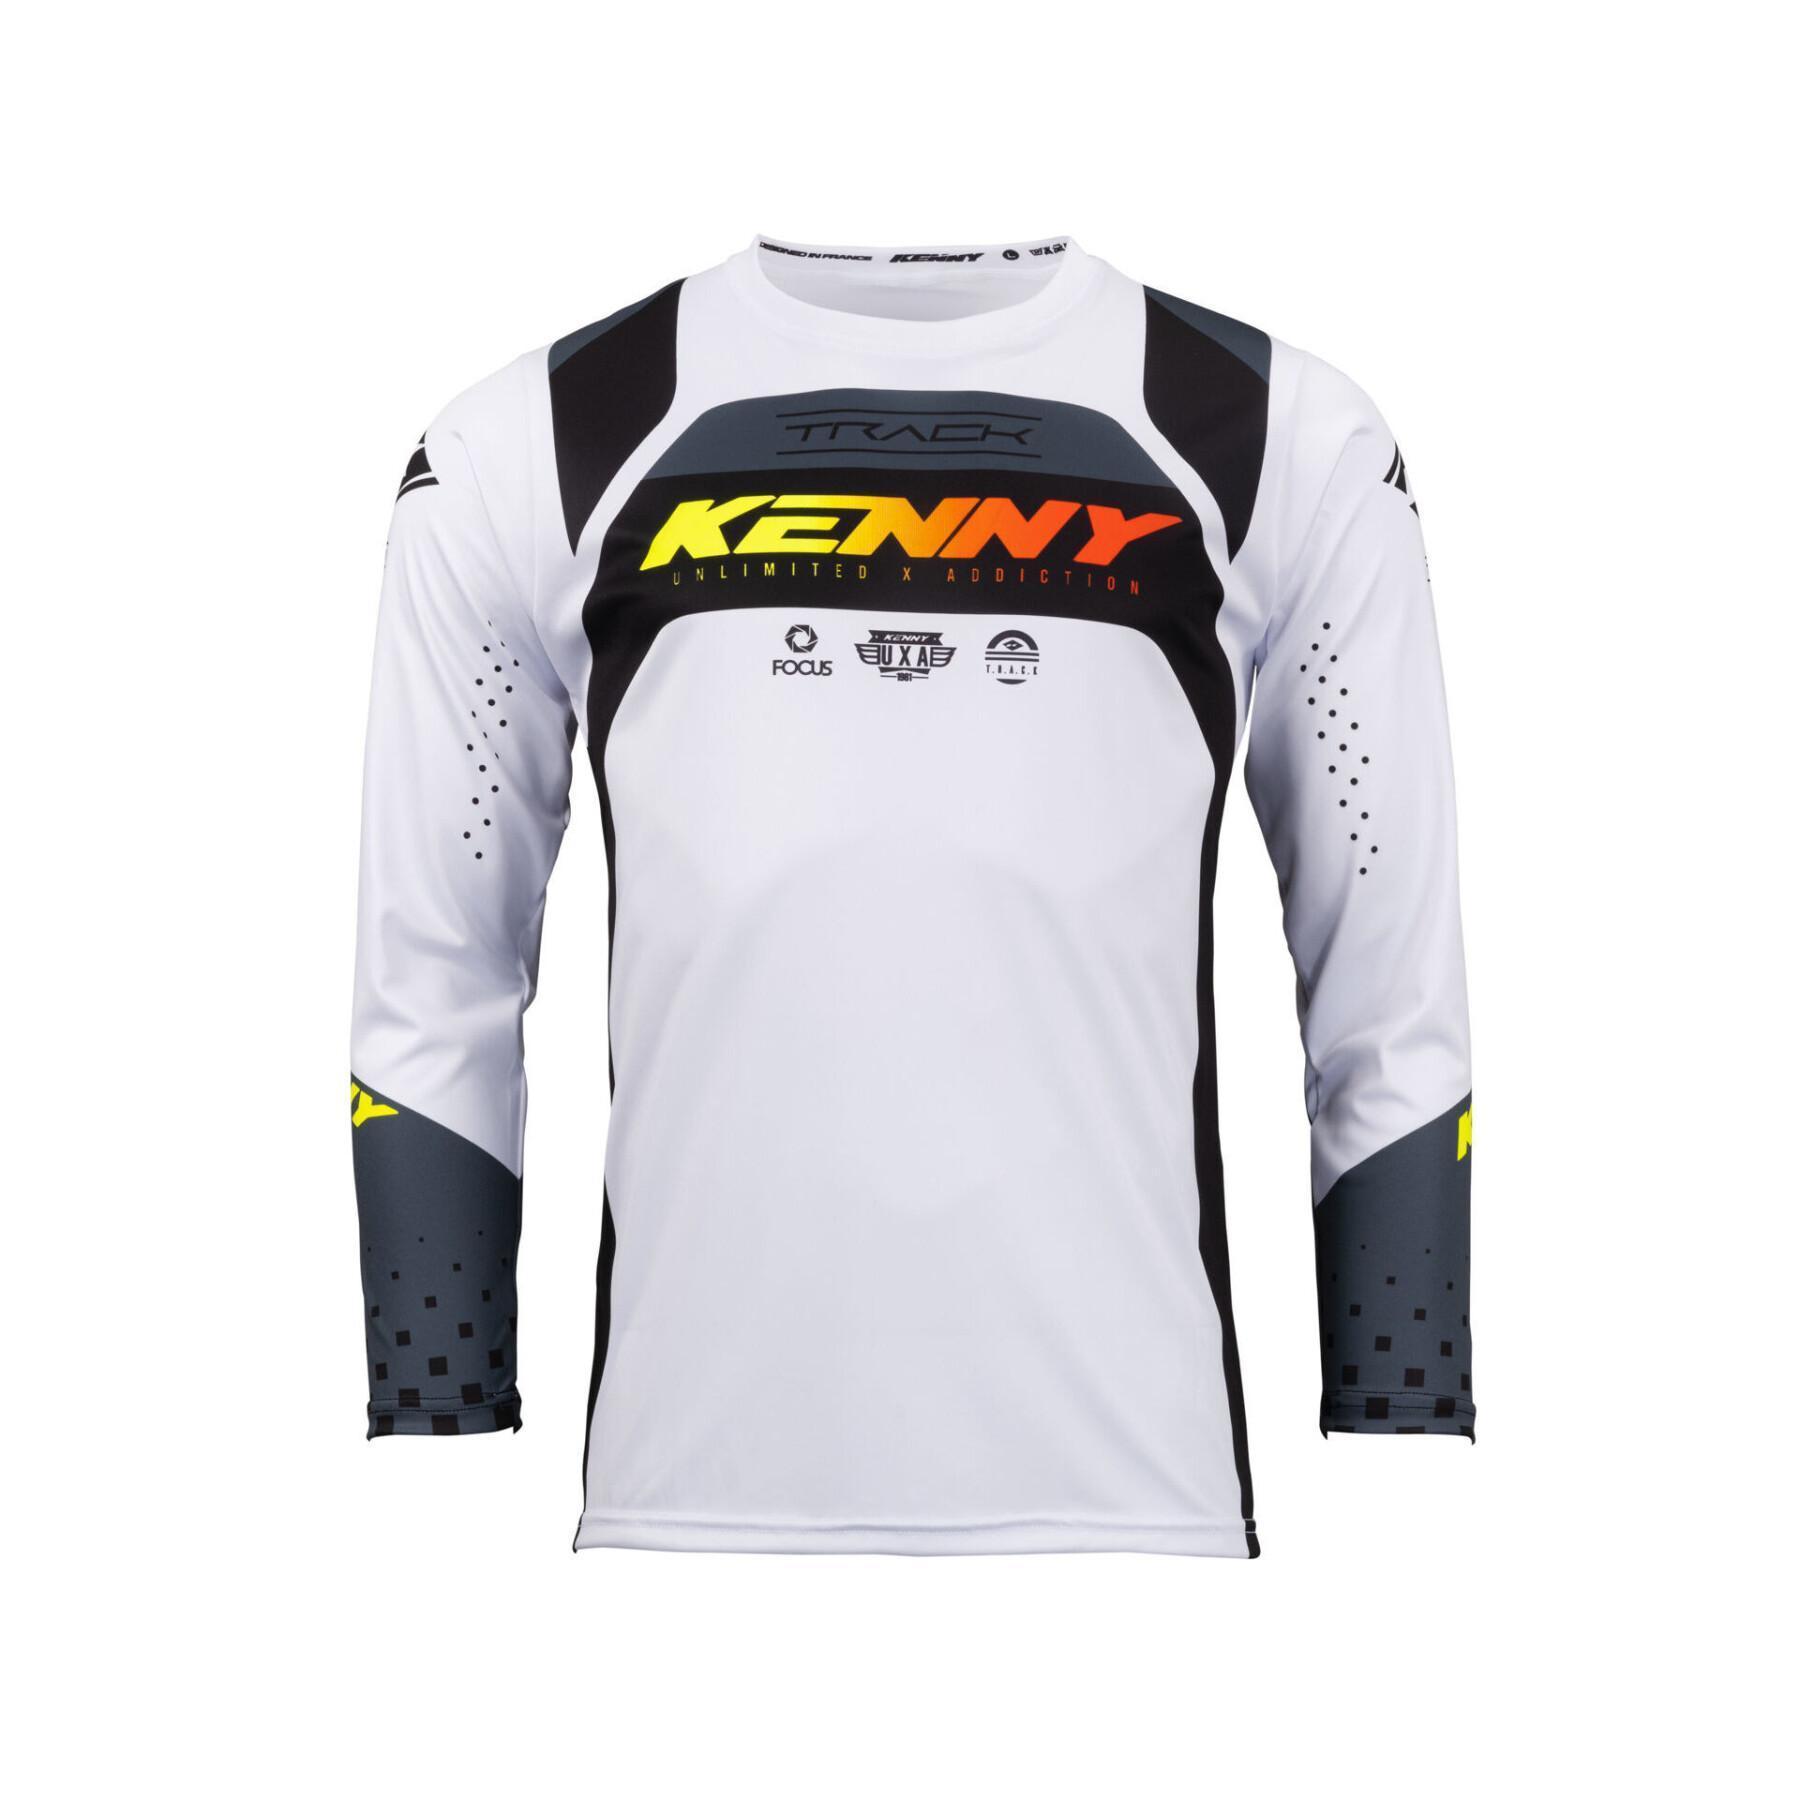 Camiseta moto cross Kenny Track Focus